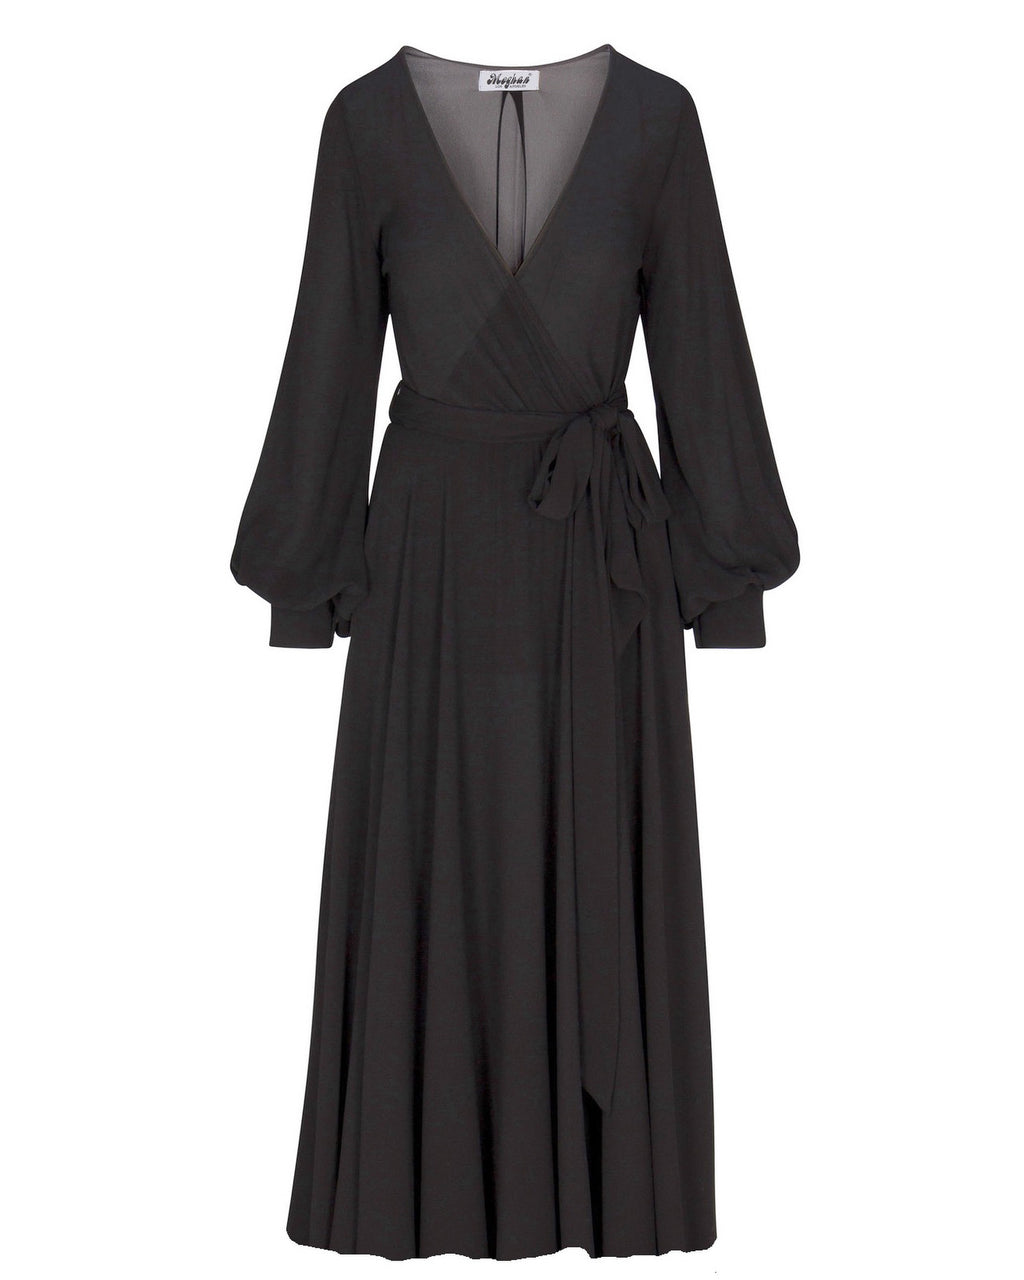 Desigual Womens Black Grey Floral Print Flared Sleeve V-Neck Dress S UK 10  EU 38